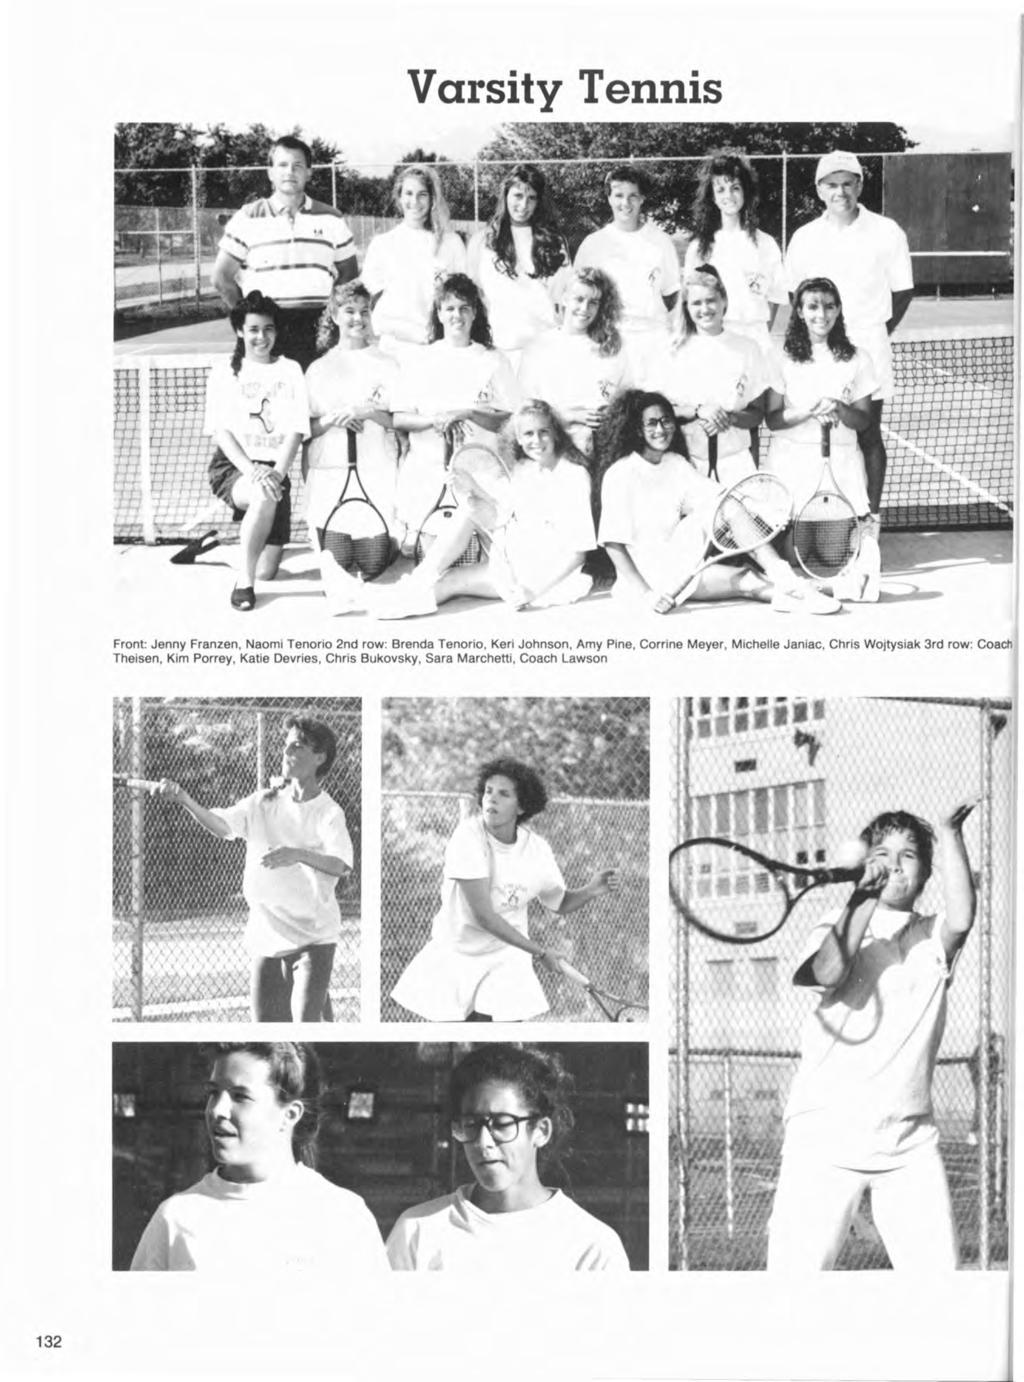 Varsity Tennis Front: Jenny Franzen, Naomi Tenorio 2nd row: Brenda Tenorio, Keri Johnson, Amy Pine, Corrine Meyer, Michelle